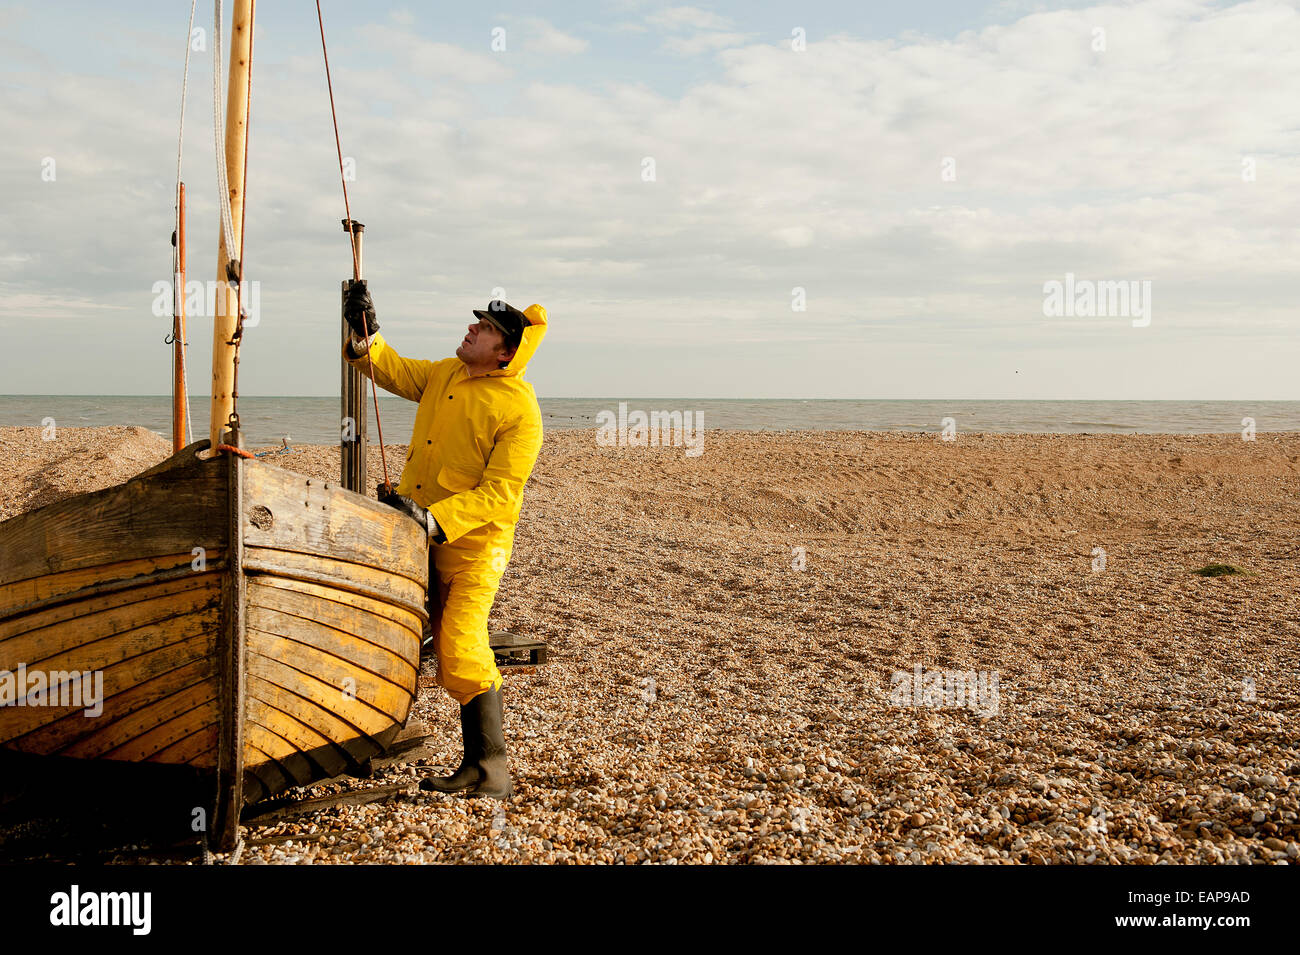 https://c8.alamy.com/comp/EAP9AD/sea-fisherman-wearing-yellow-waterproof-overalls-preparing-his-fishing-EAP9AD.jpg